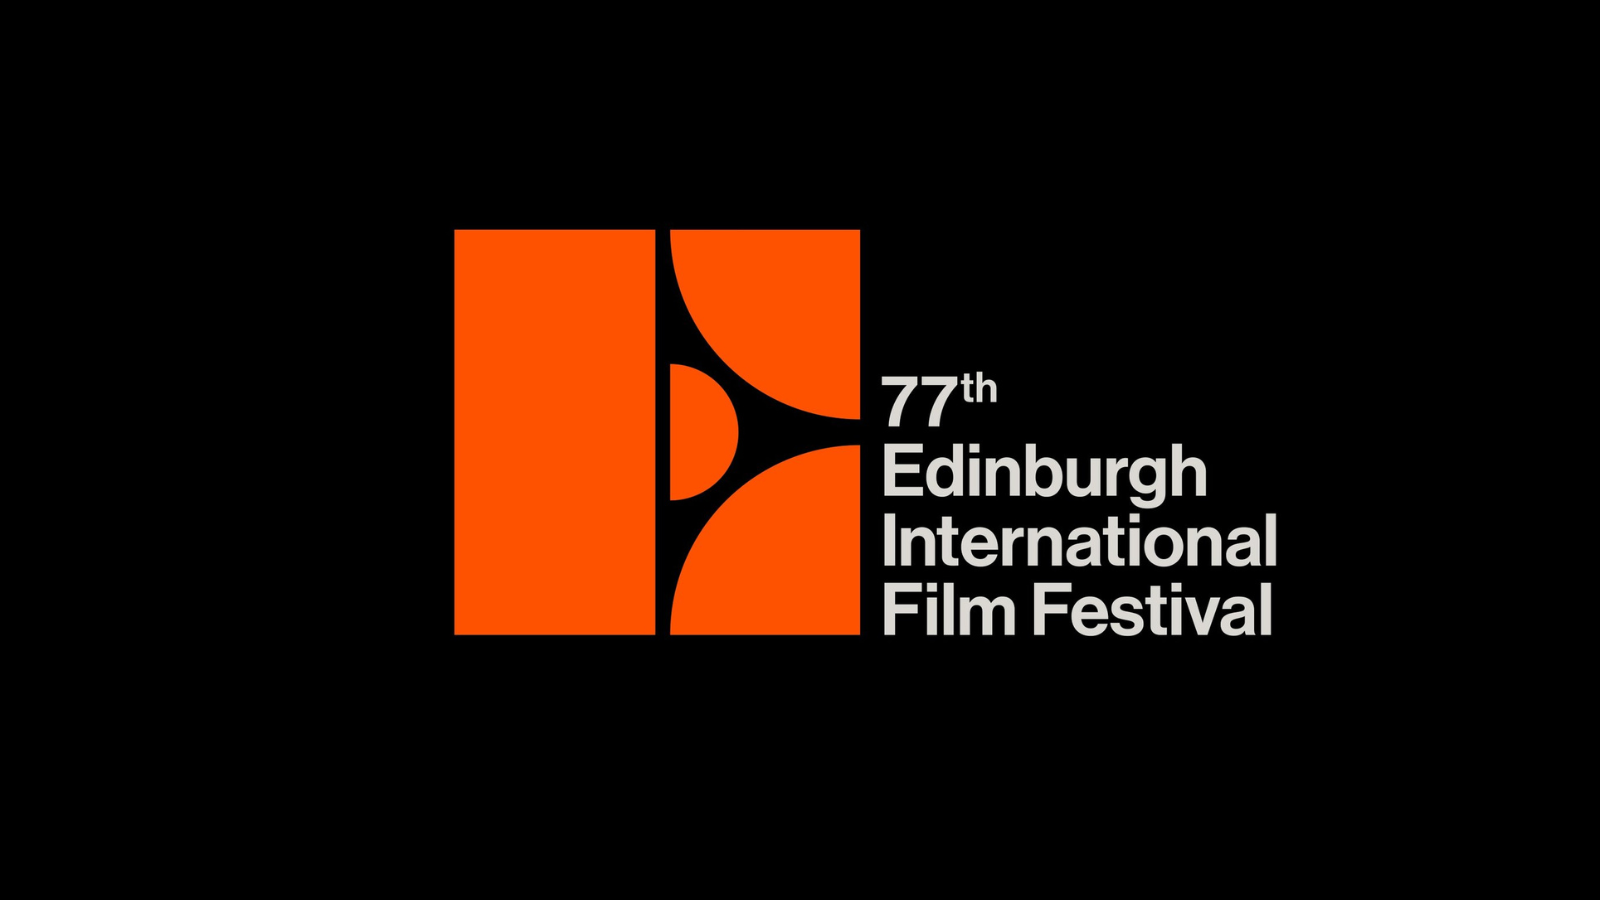 The 77th edition of the Edinburgh International Film Festival logo on a black background